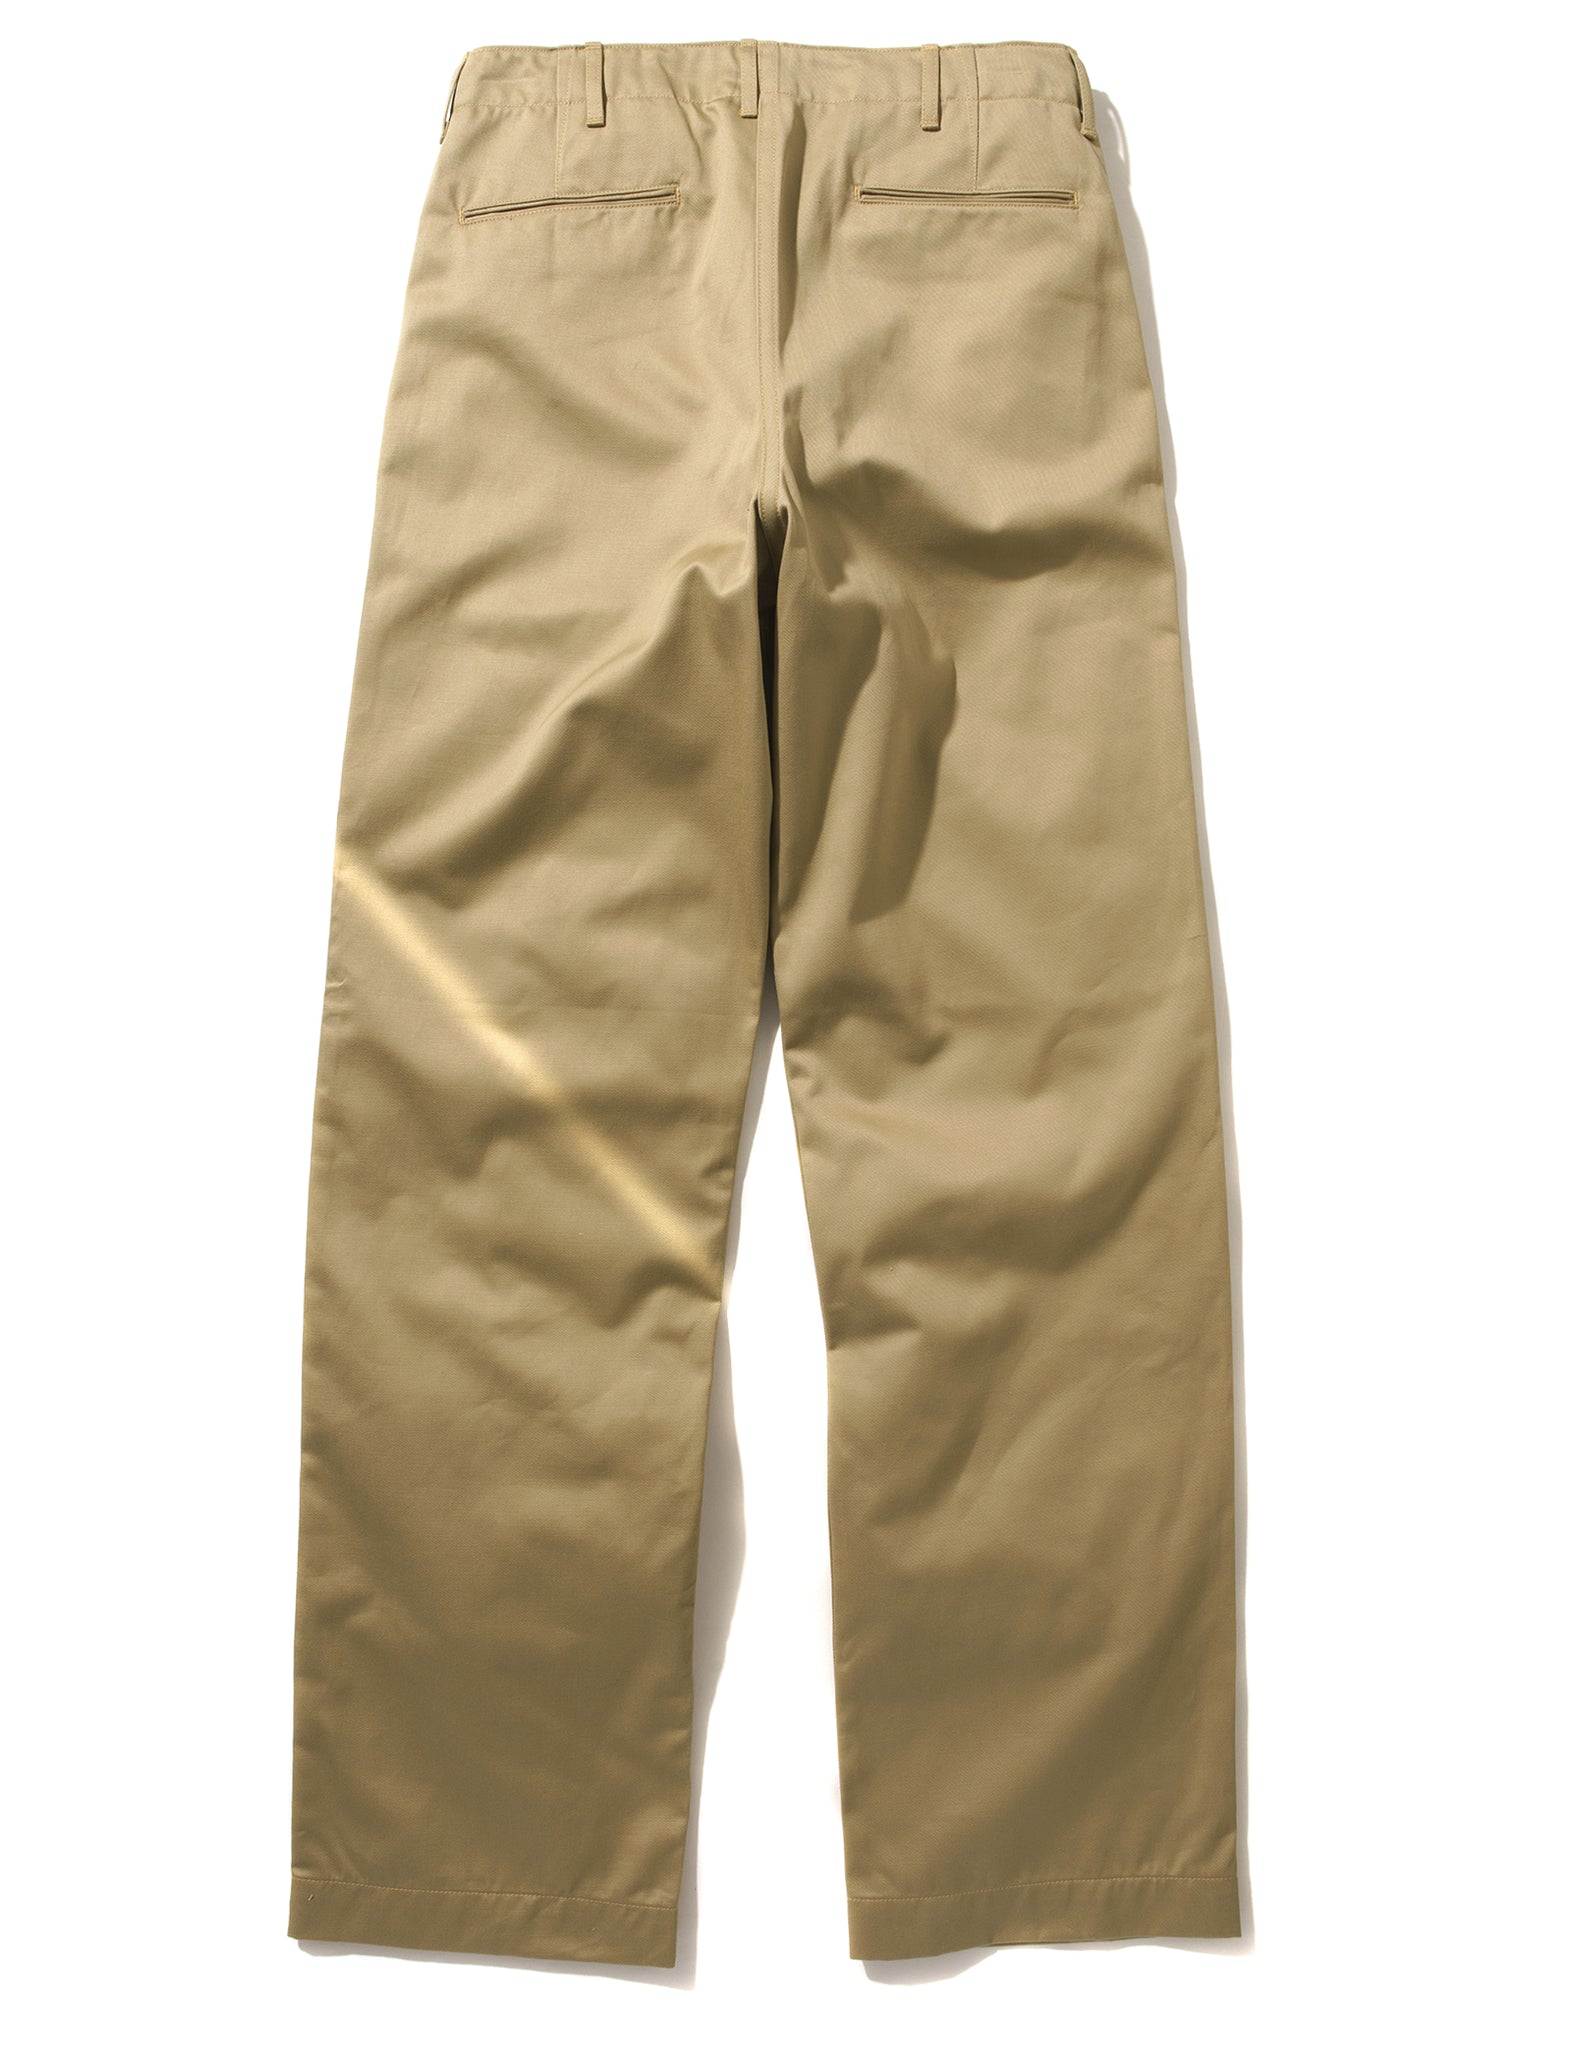 U.S. Army ’41 Trousers